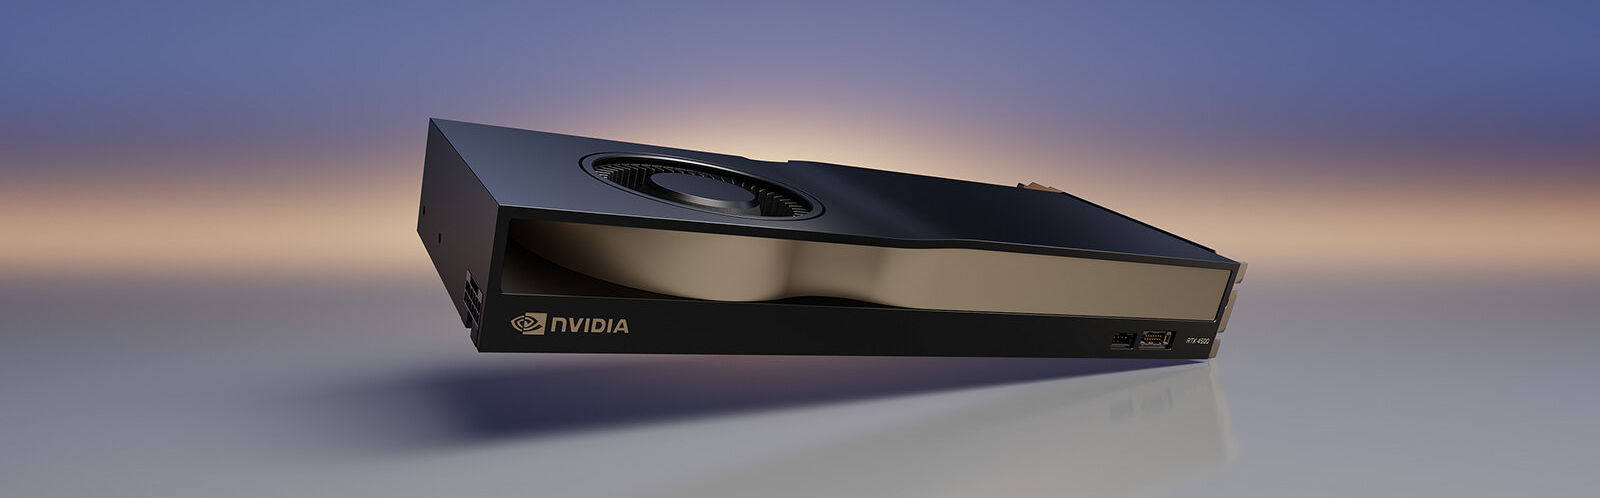 Nvidia GeForce RTX 5000 release date estimate